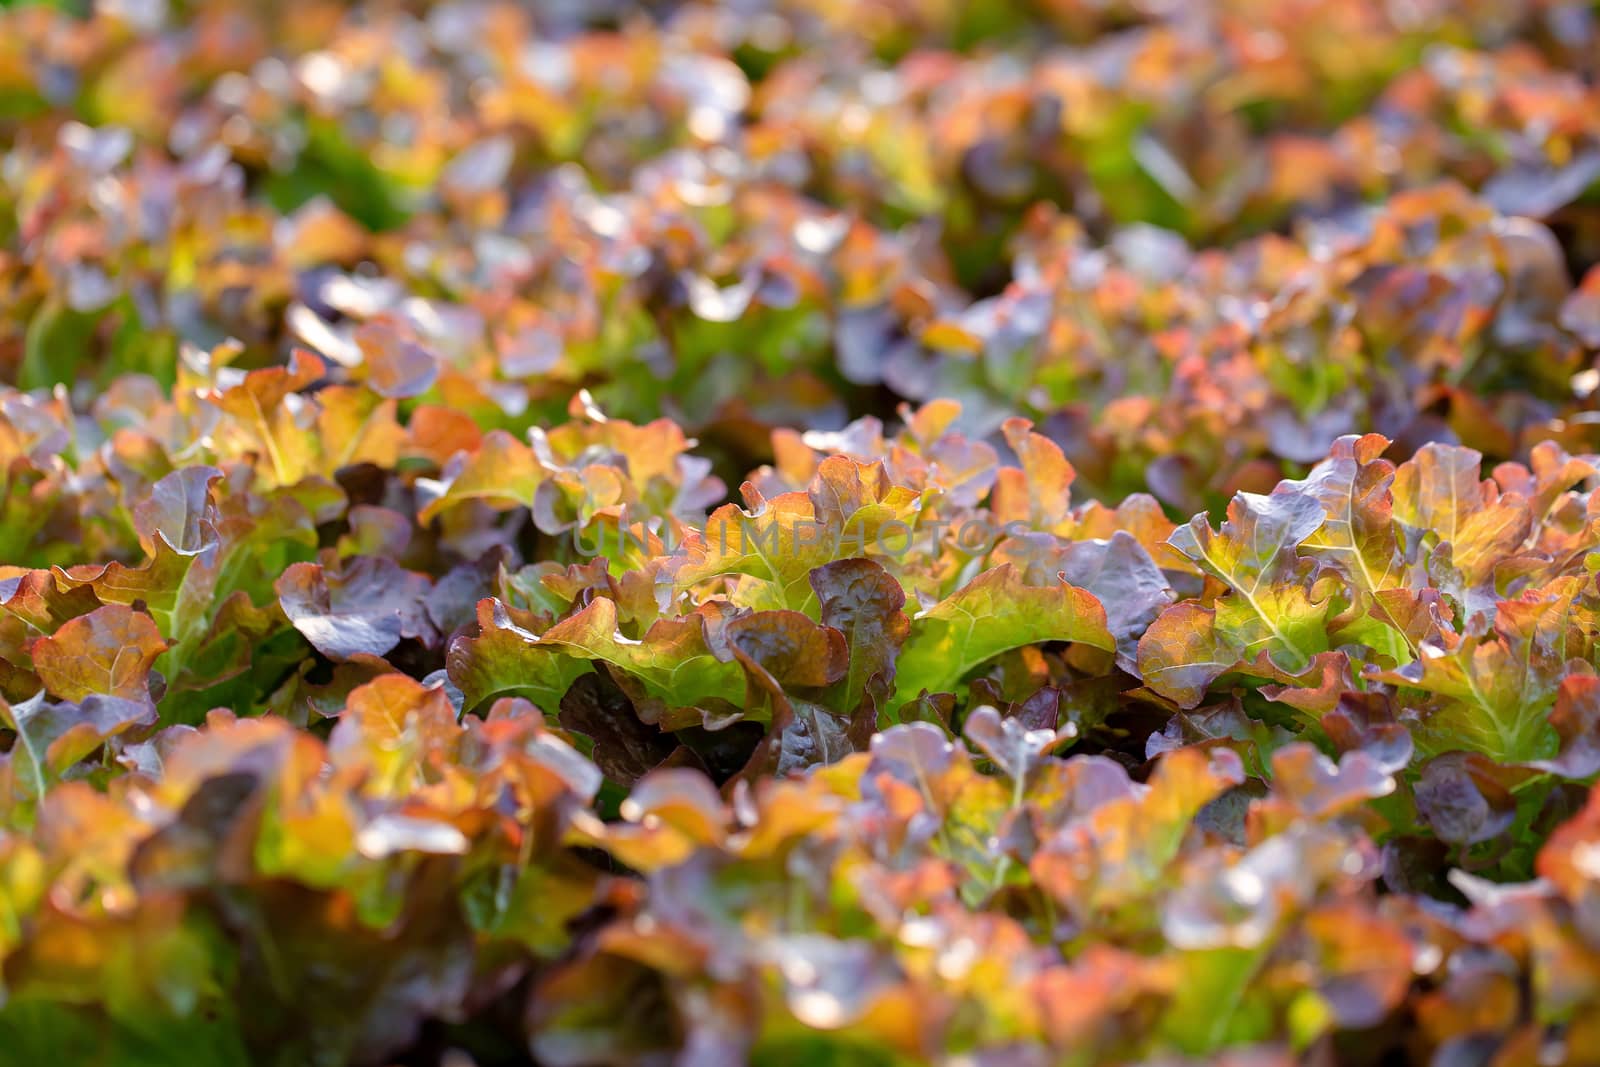 Fresh Red Oak lettuce leaves, Salads vegetable hydroponics farm by kaiskynet